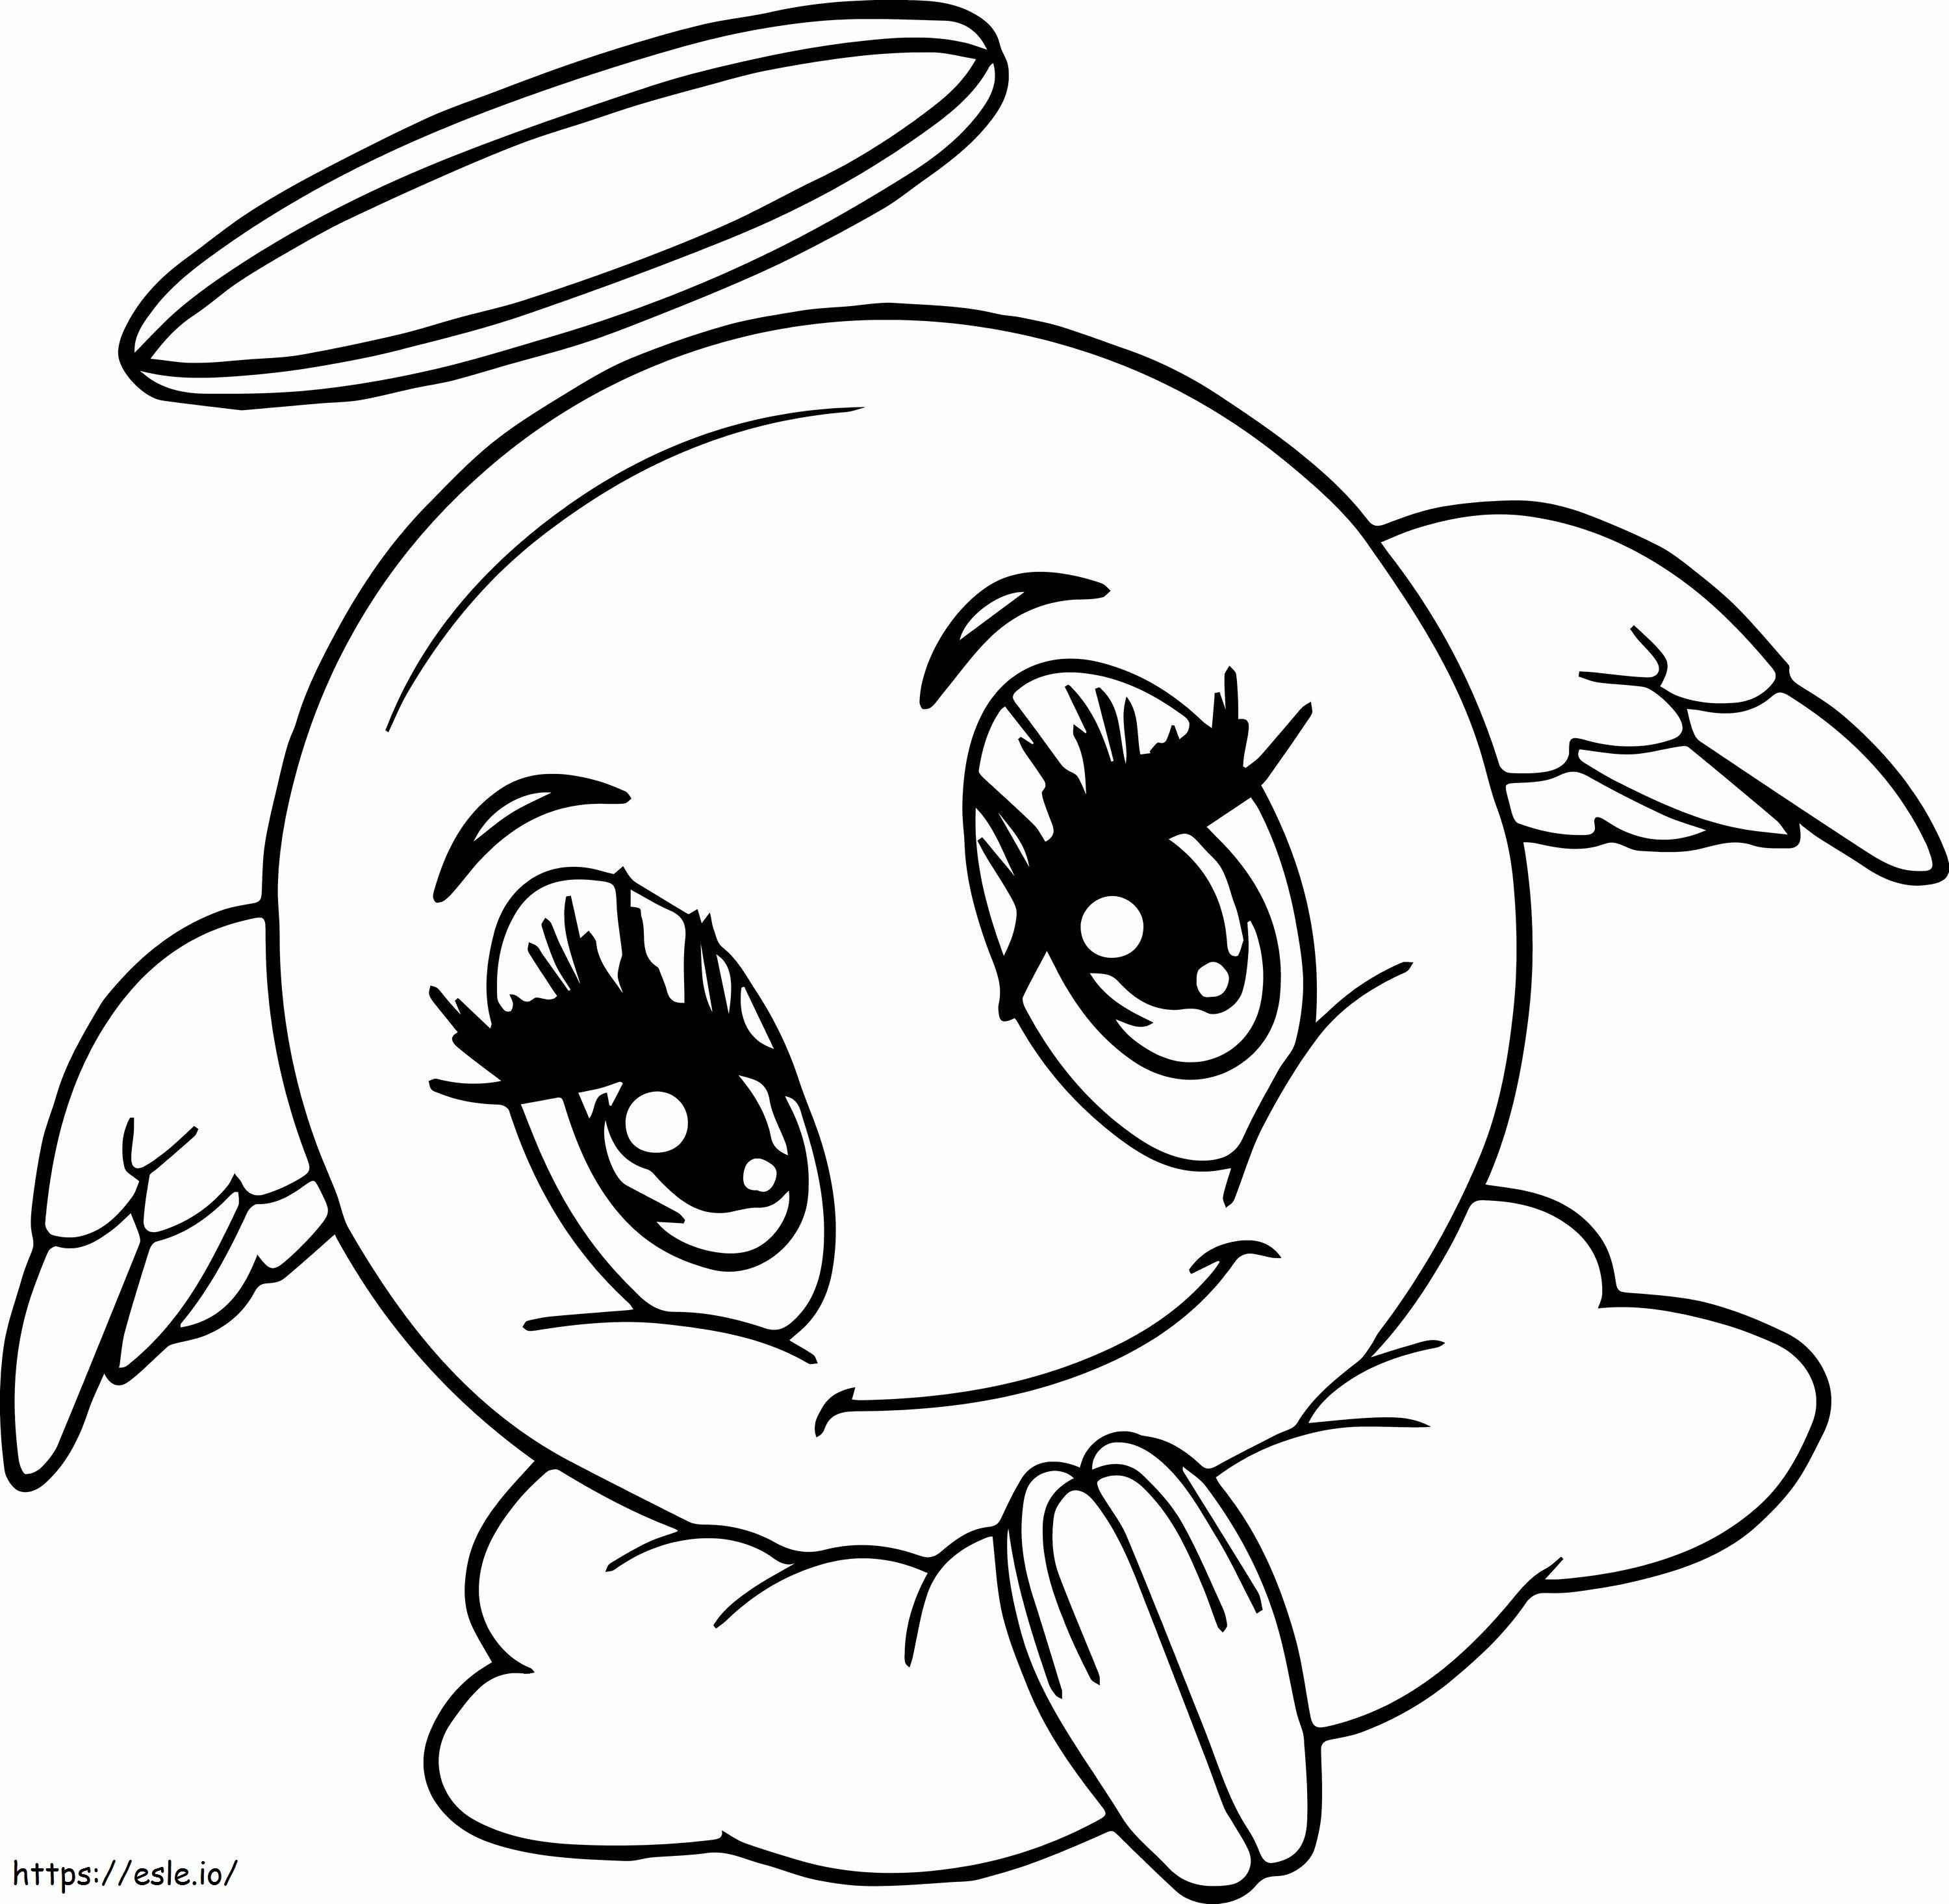 Smiling Angel Emoji coloring page